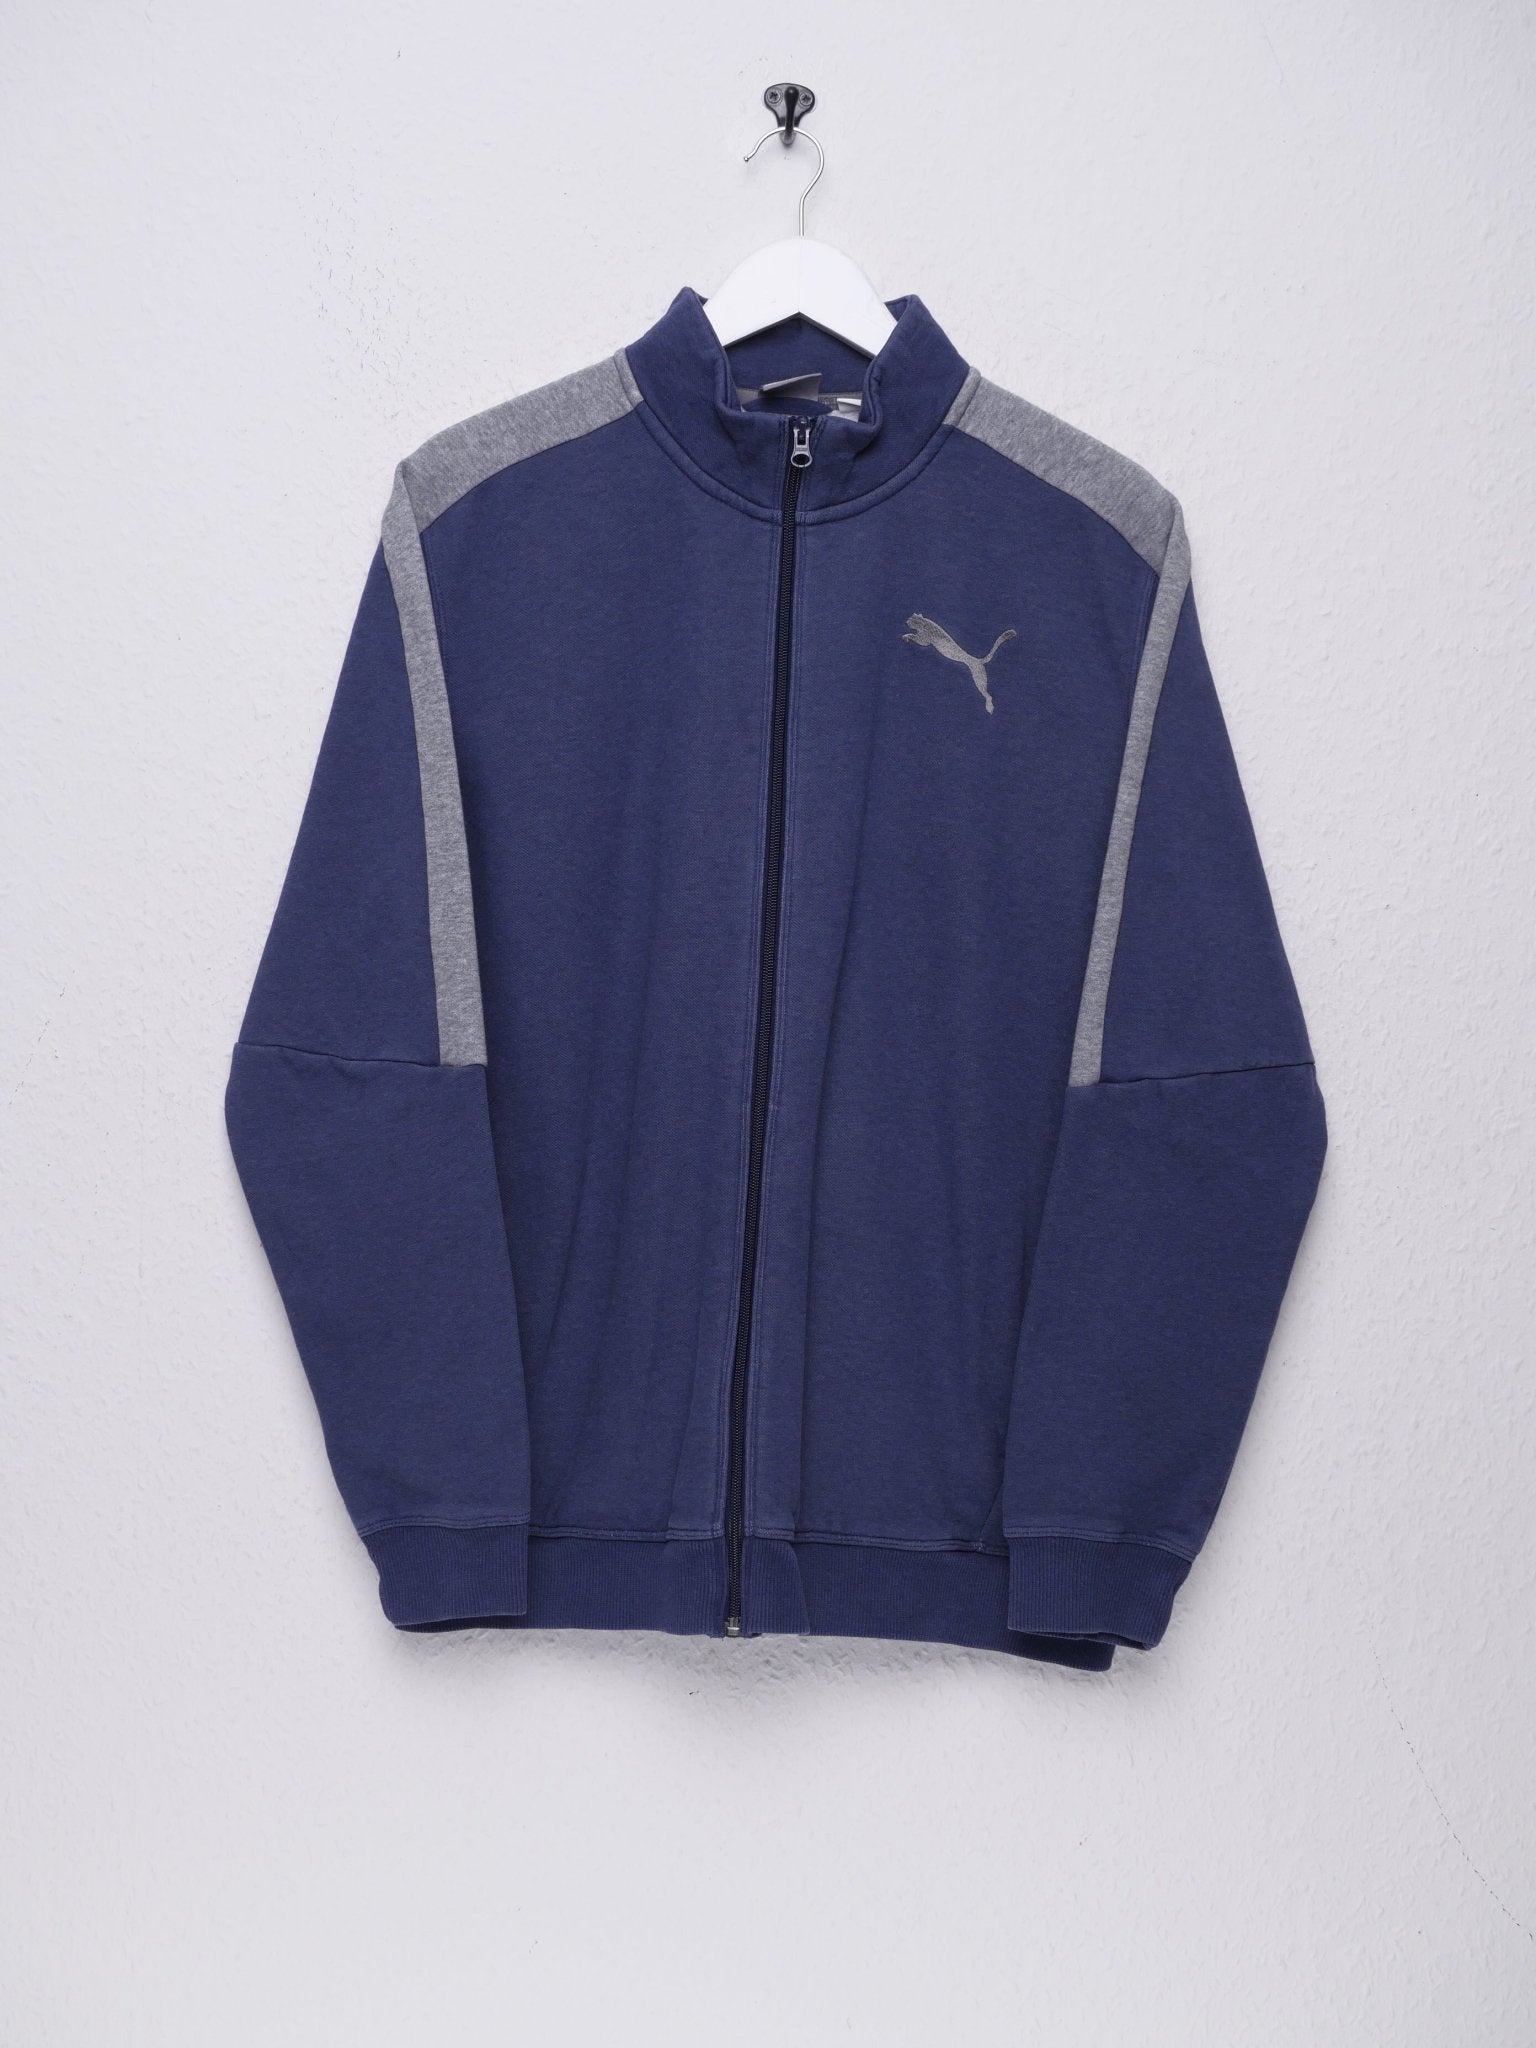 Puma embroidered Logo blue Zip Sweater - Peeces